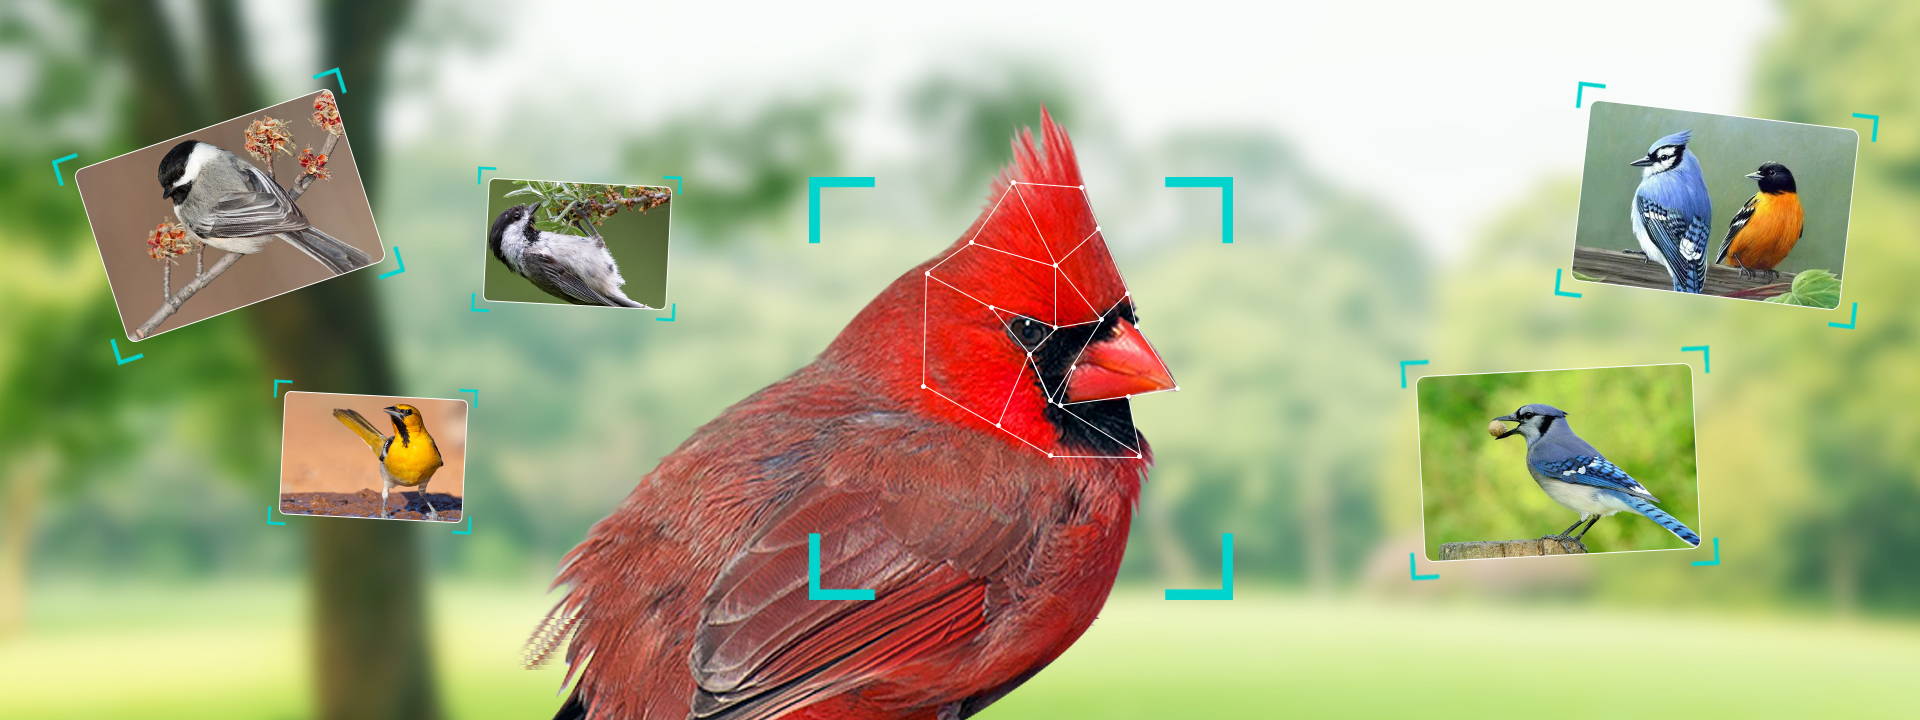 Birdkiss Smart Bird Feeder Recognizes Multiple Bird Species